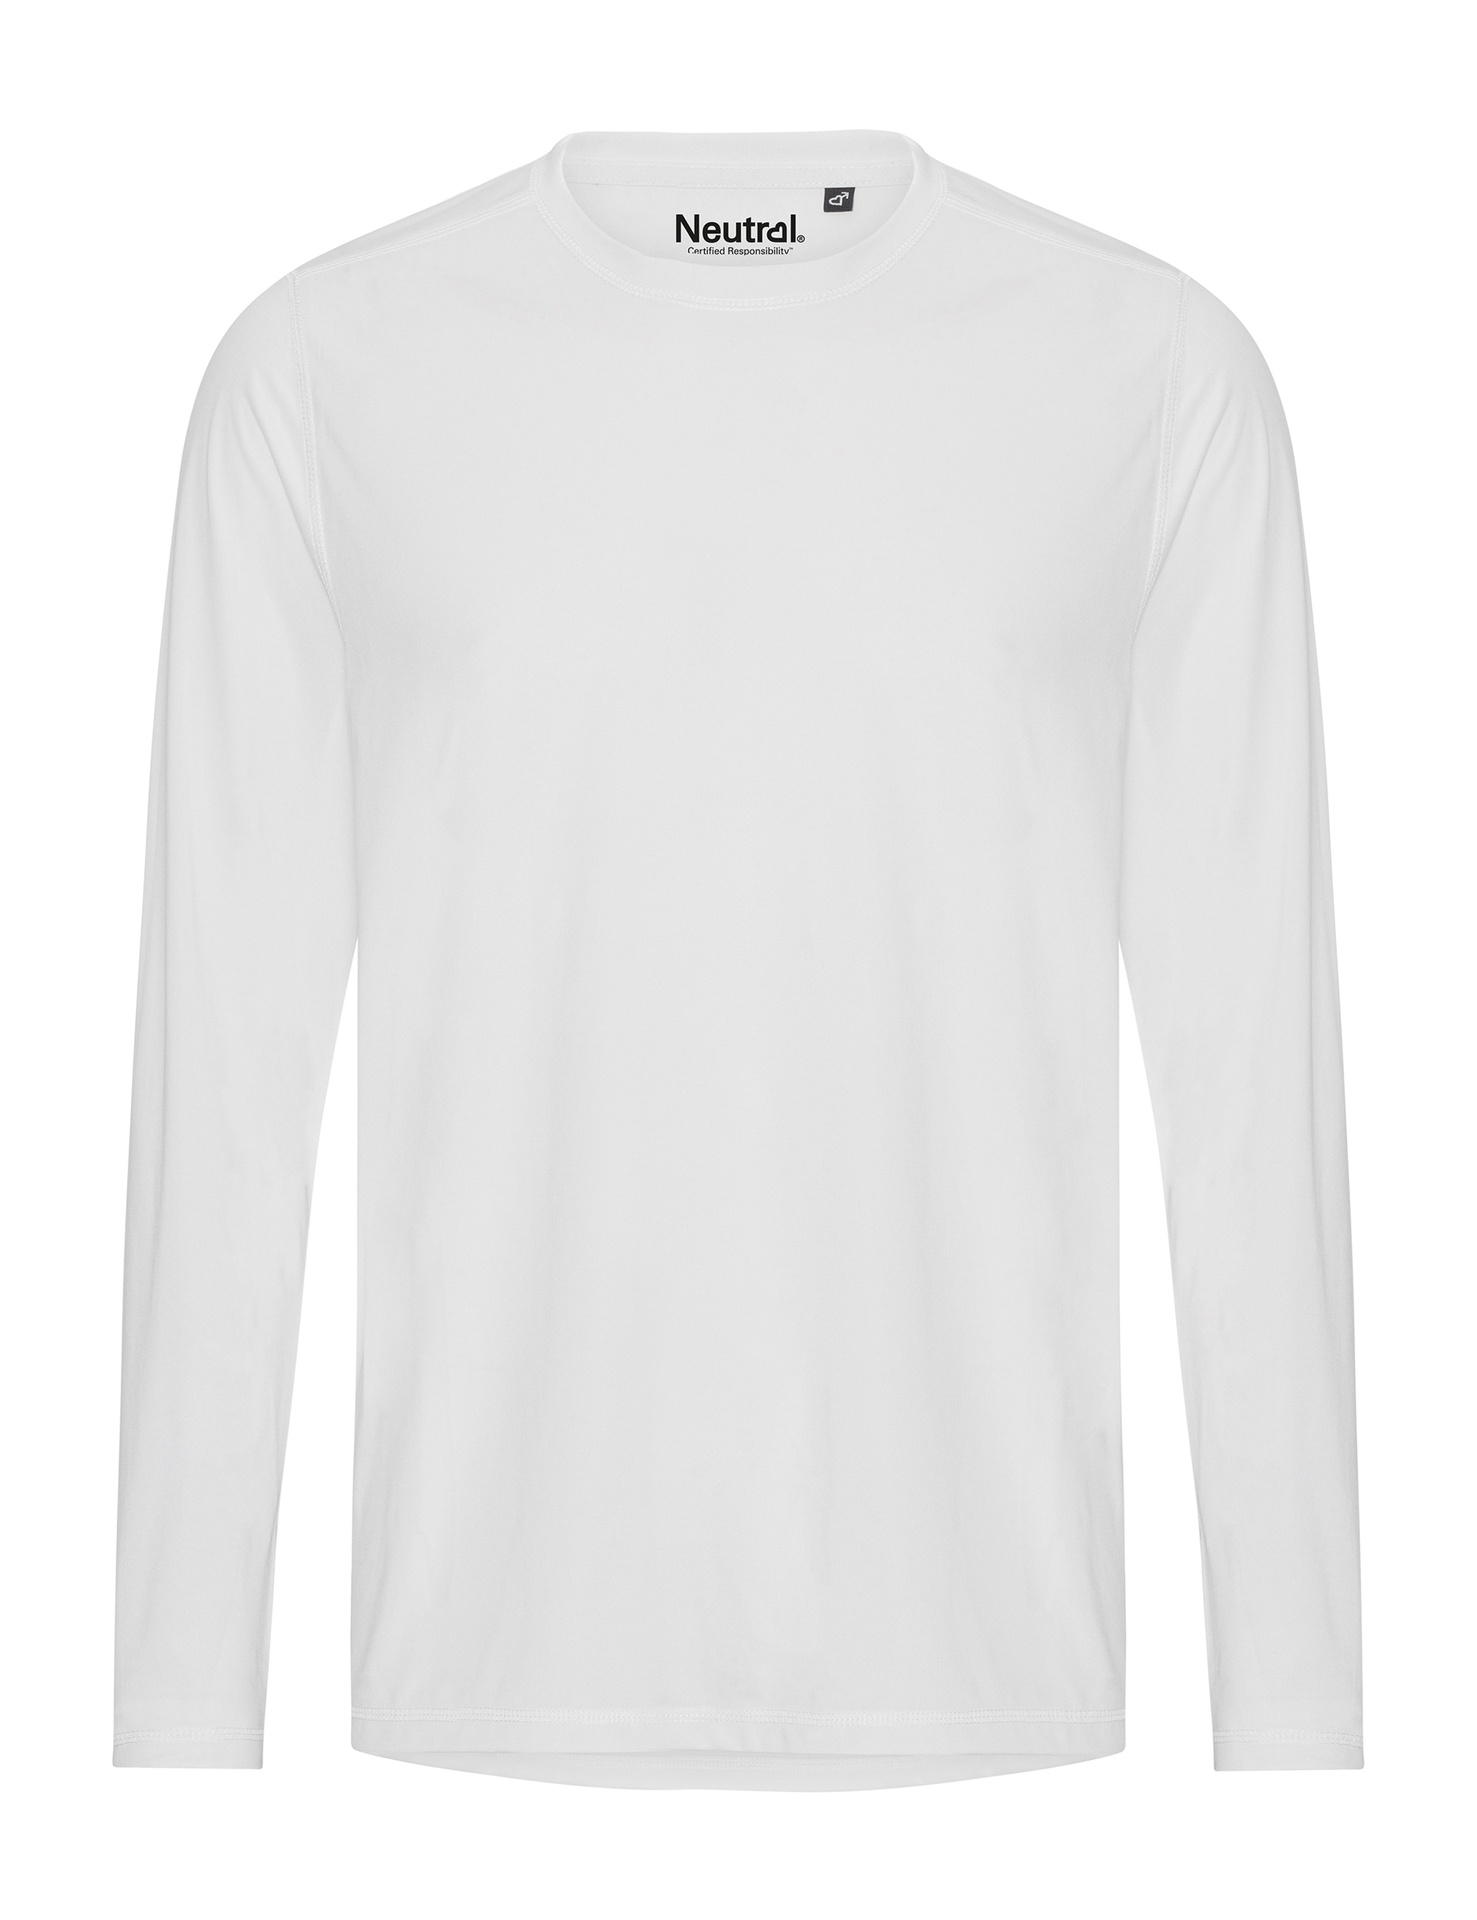 [PR/03824] Recycled Performance LS T-Shirt (White 01, 2XL)